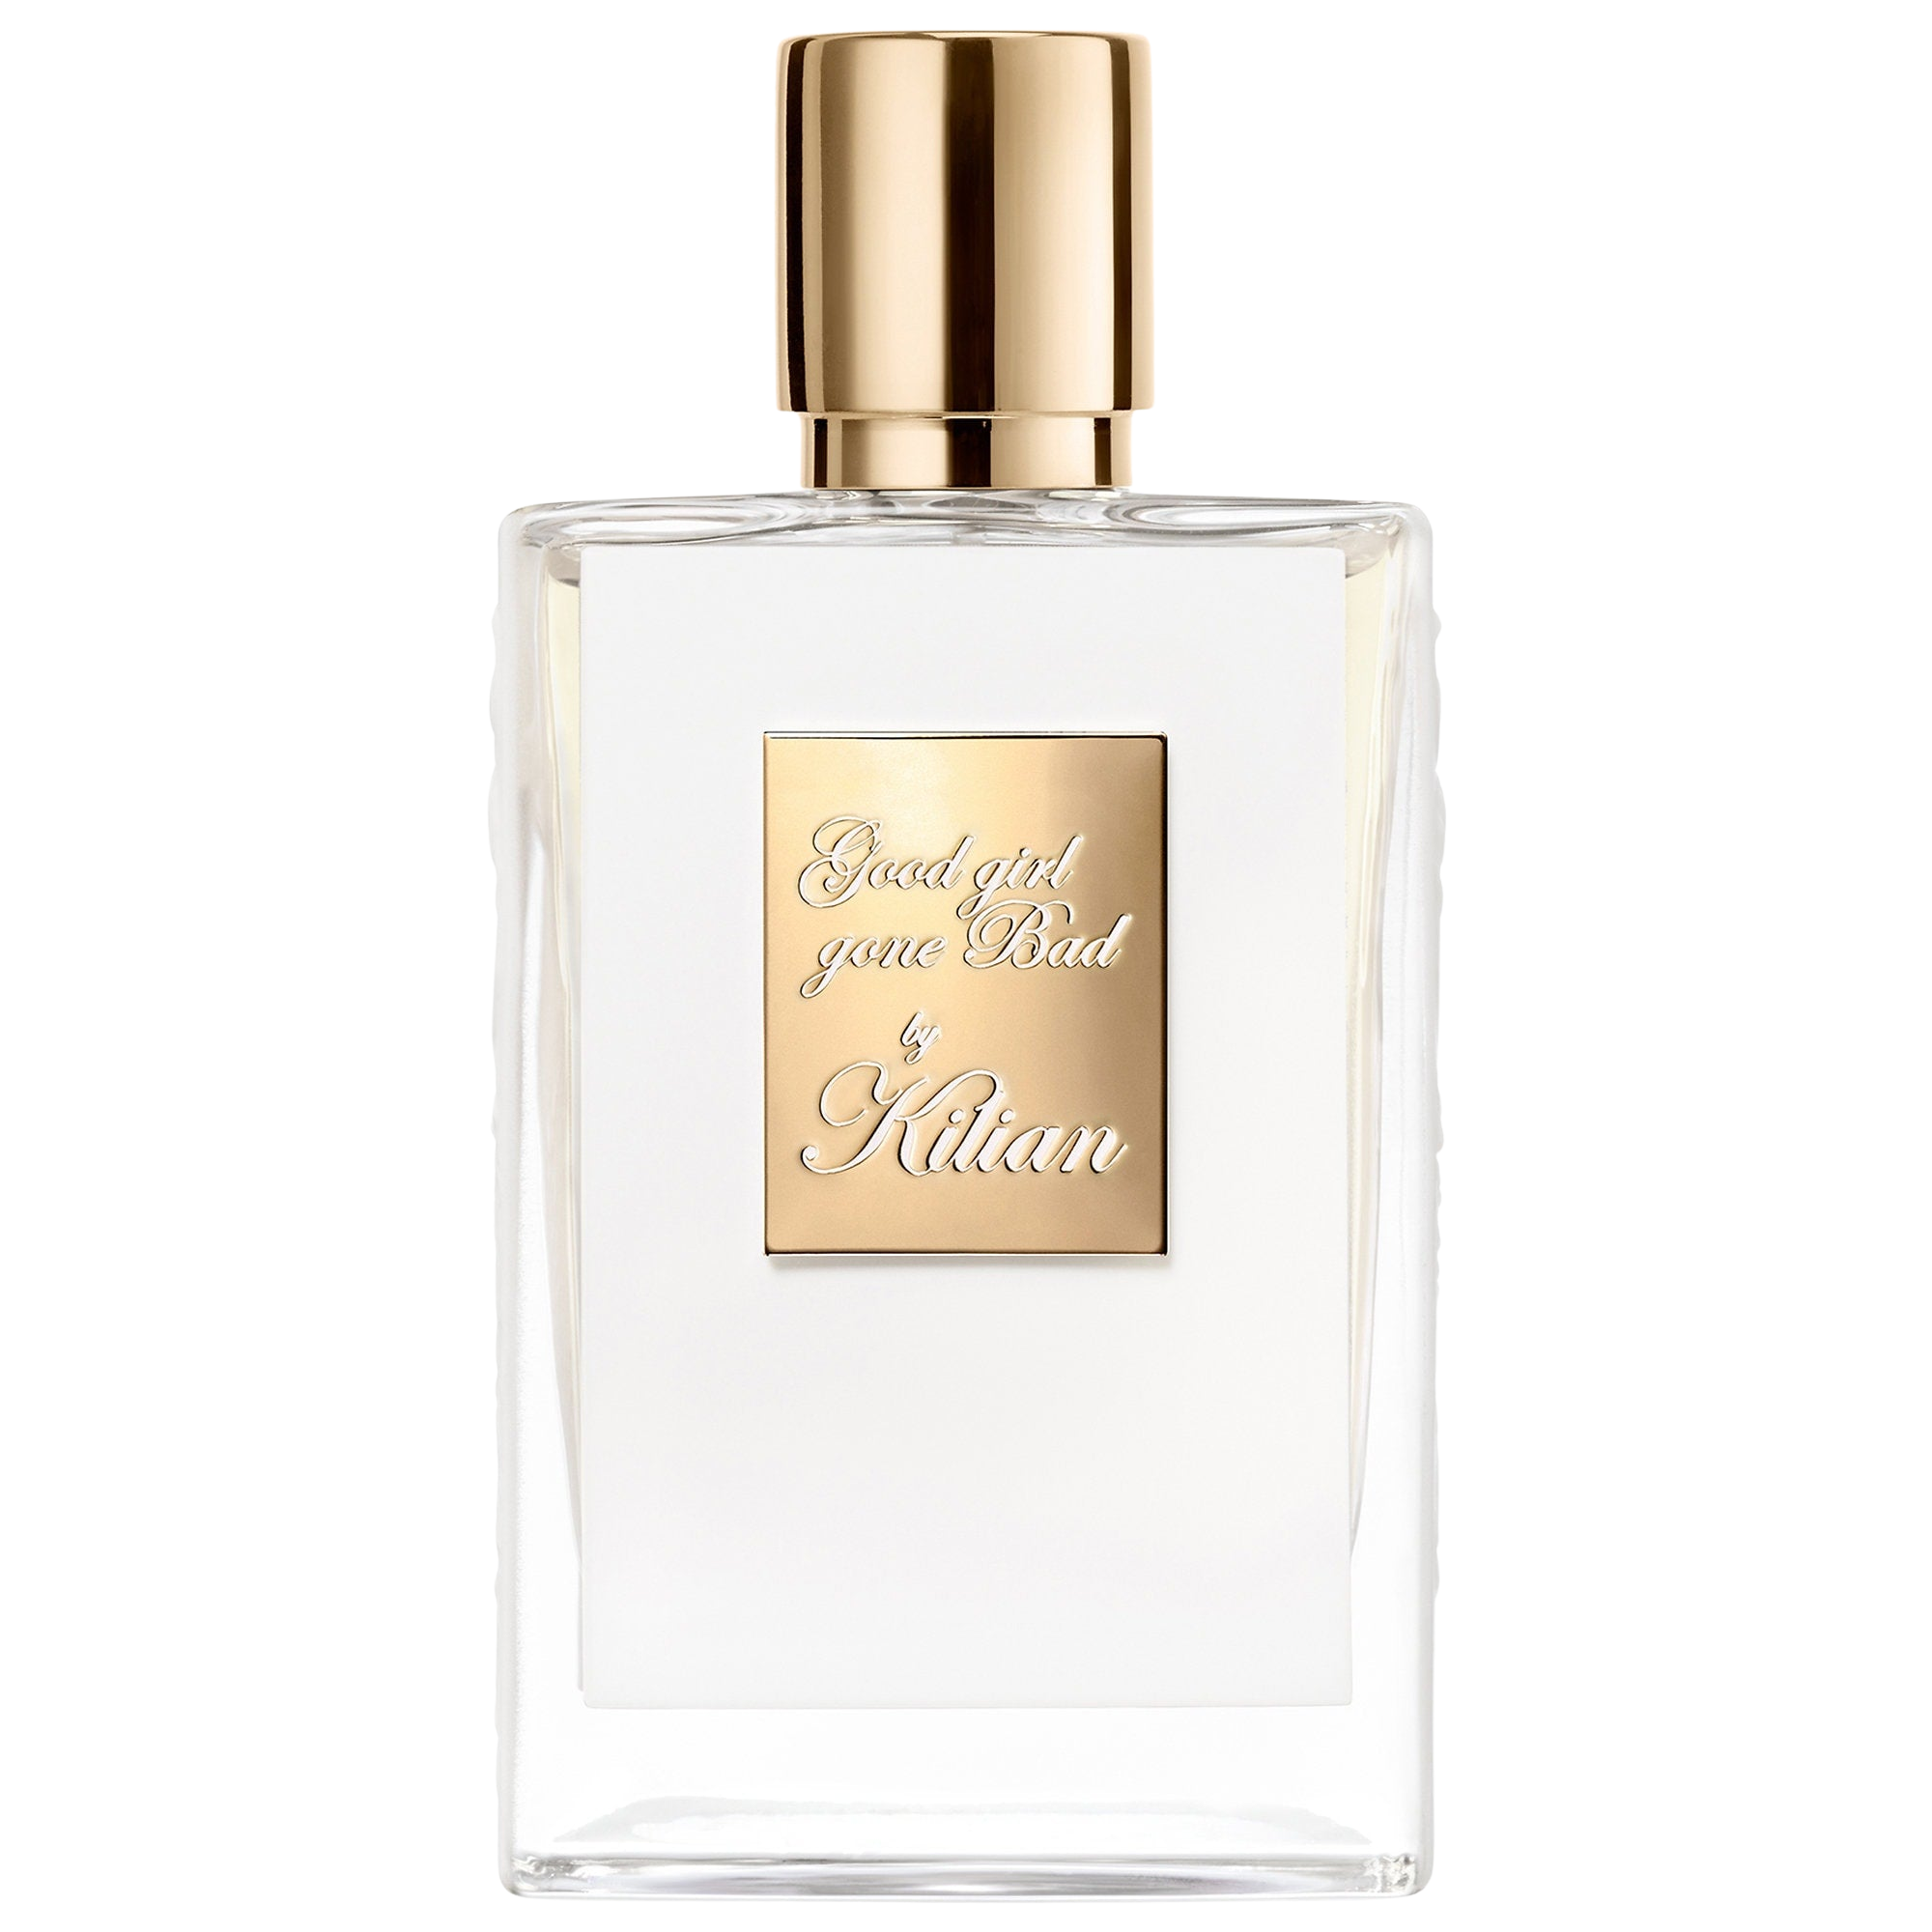 Kilian Good Girl Gone Bad Eau de Parfum Spray for Women, 1.7 Oz 